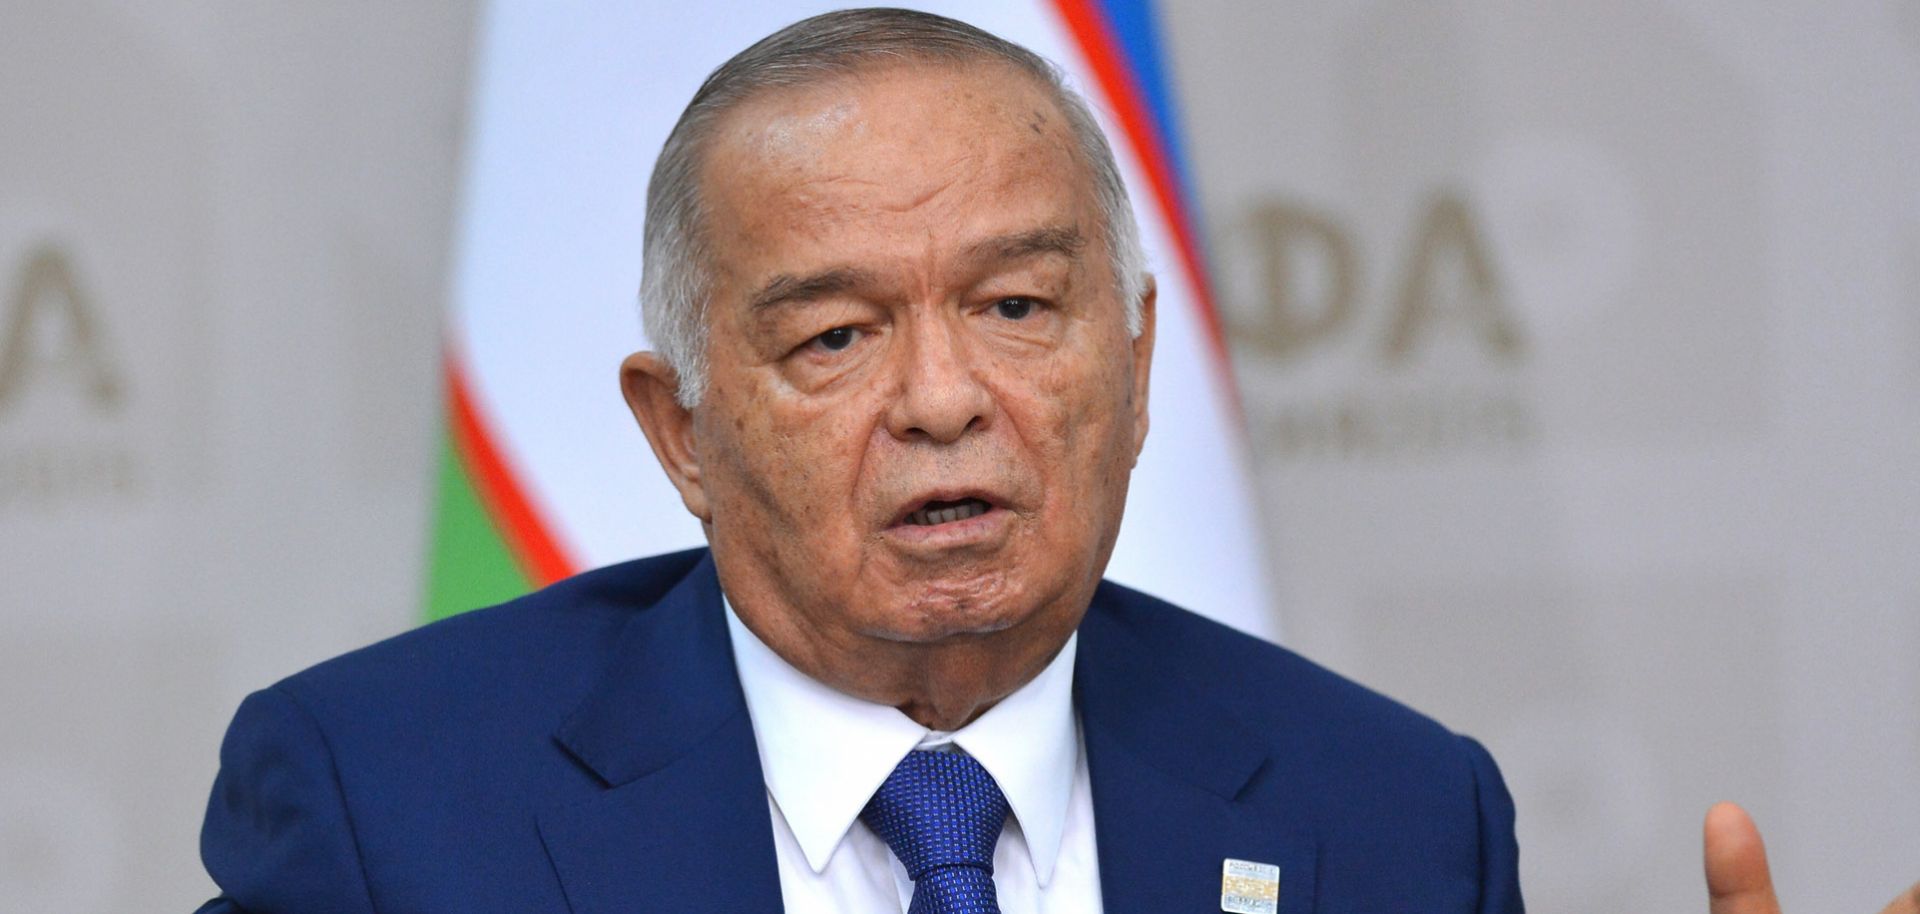 Uzbek President Islam Karimov is seen on July 10 in Russia at the BRICS/SCO summit.